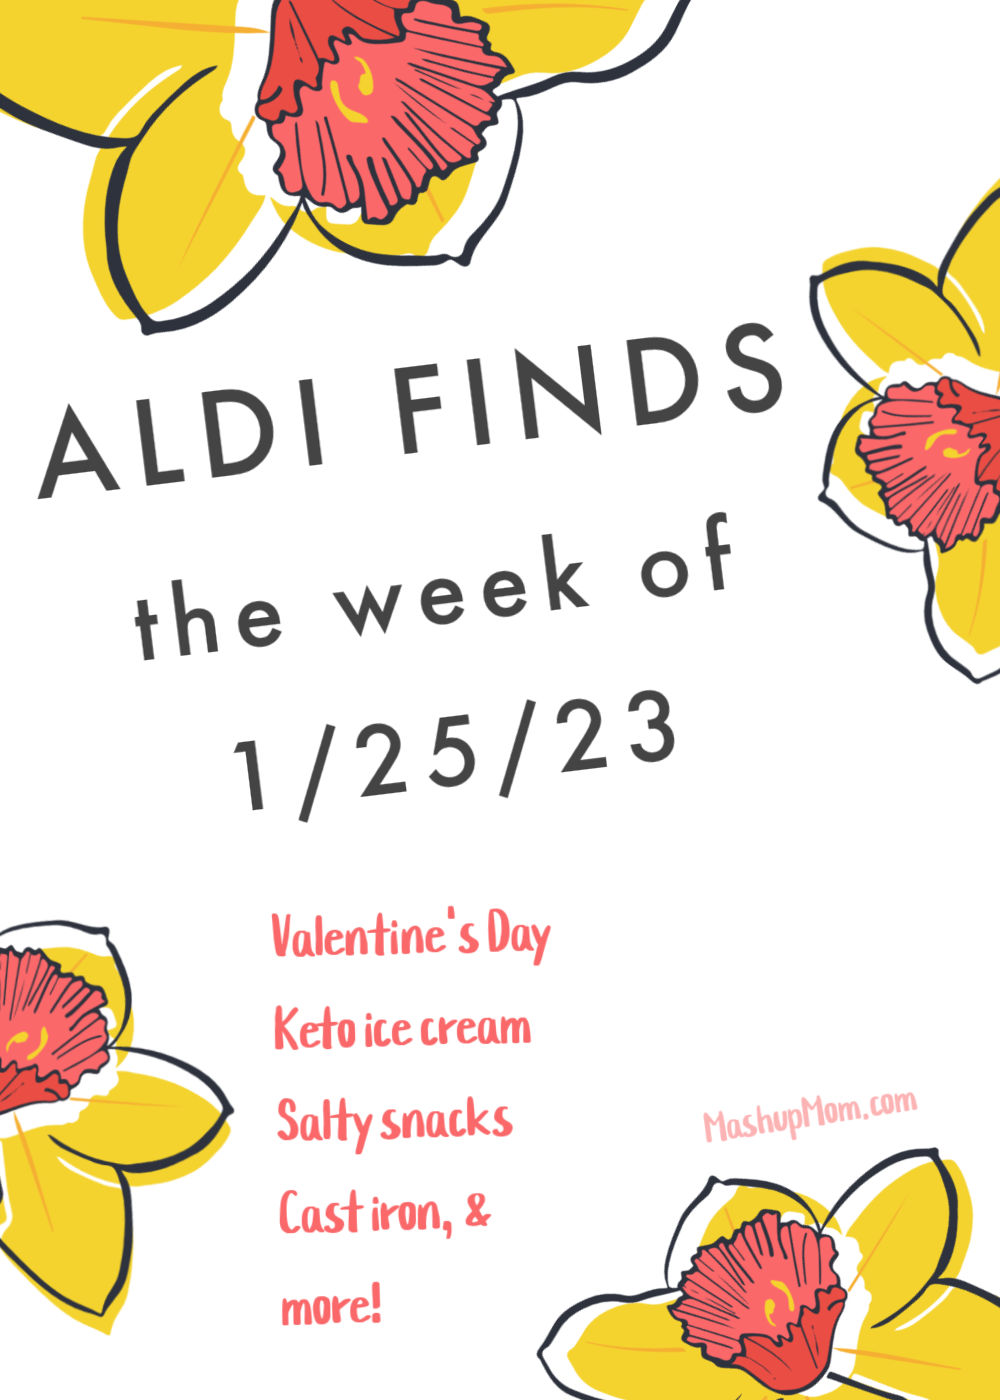 aldi finds week of 1/25/23